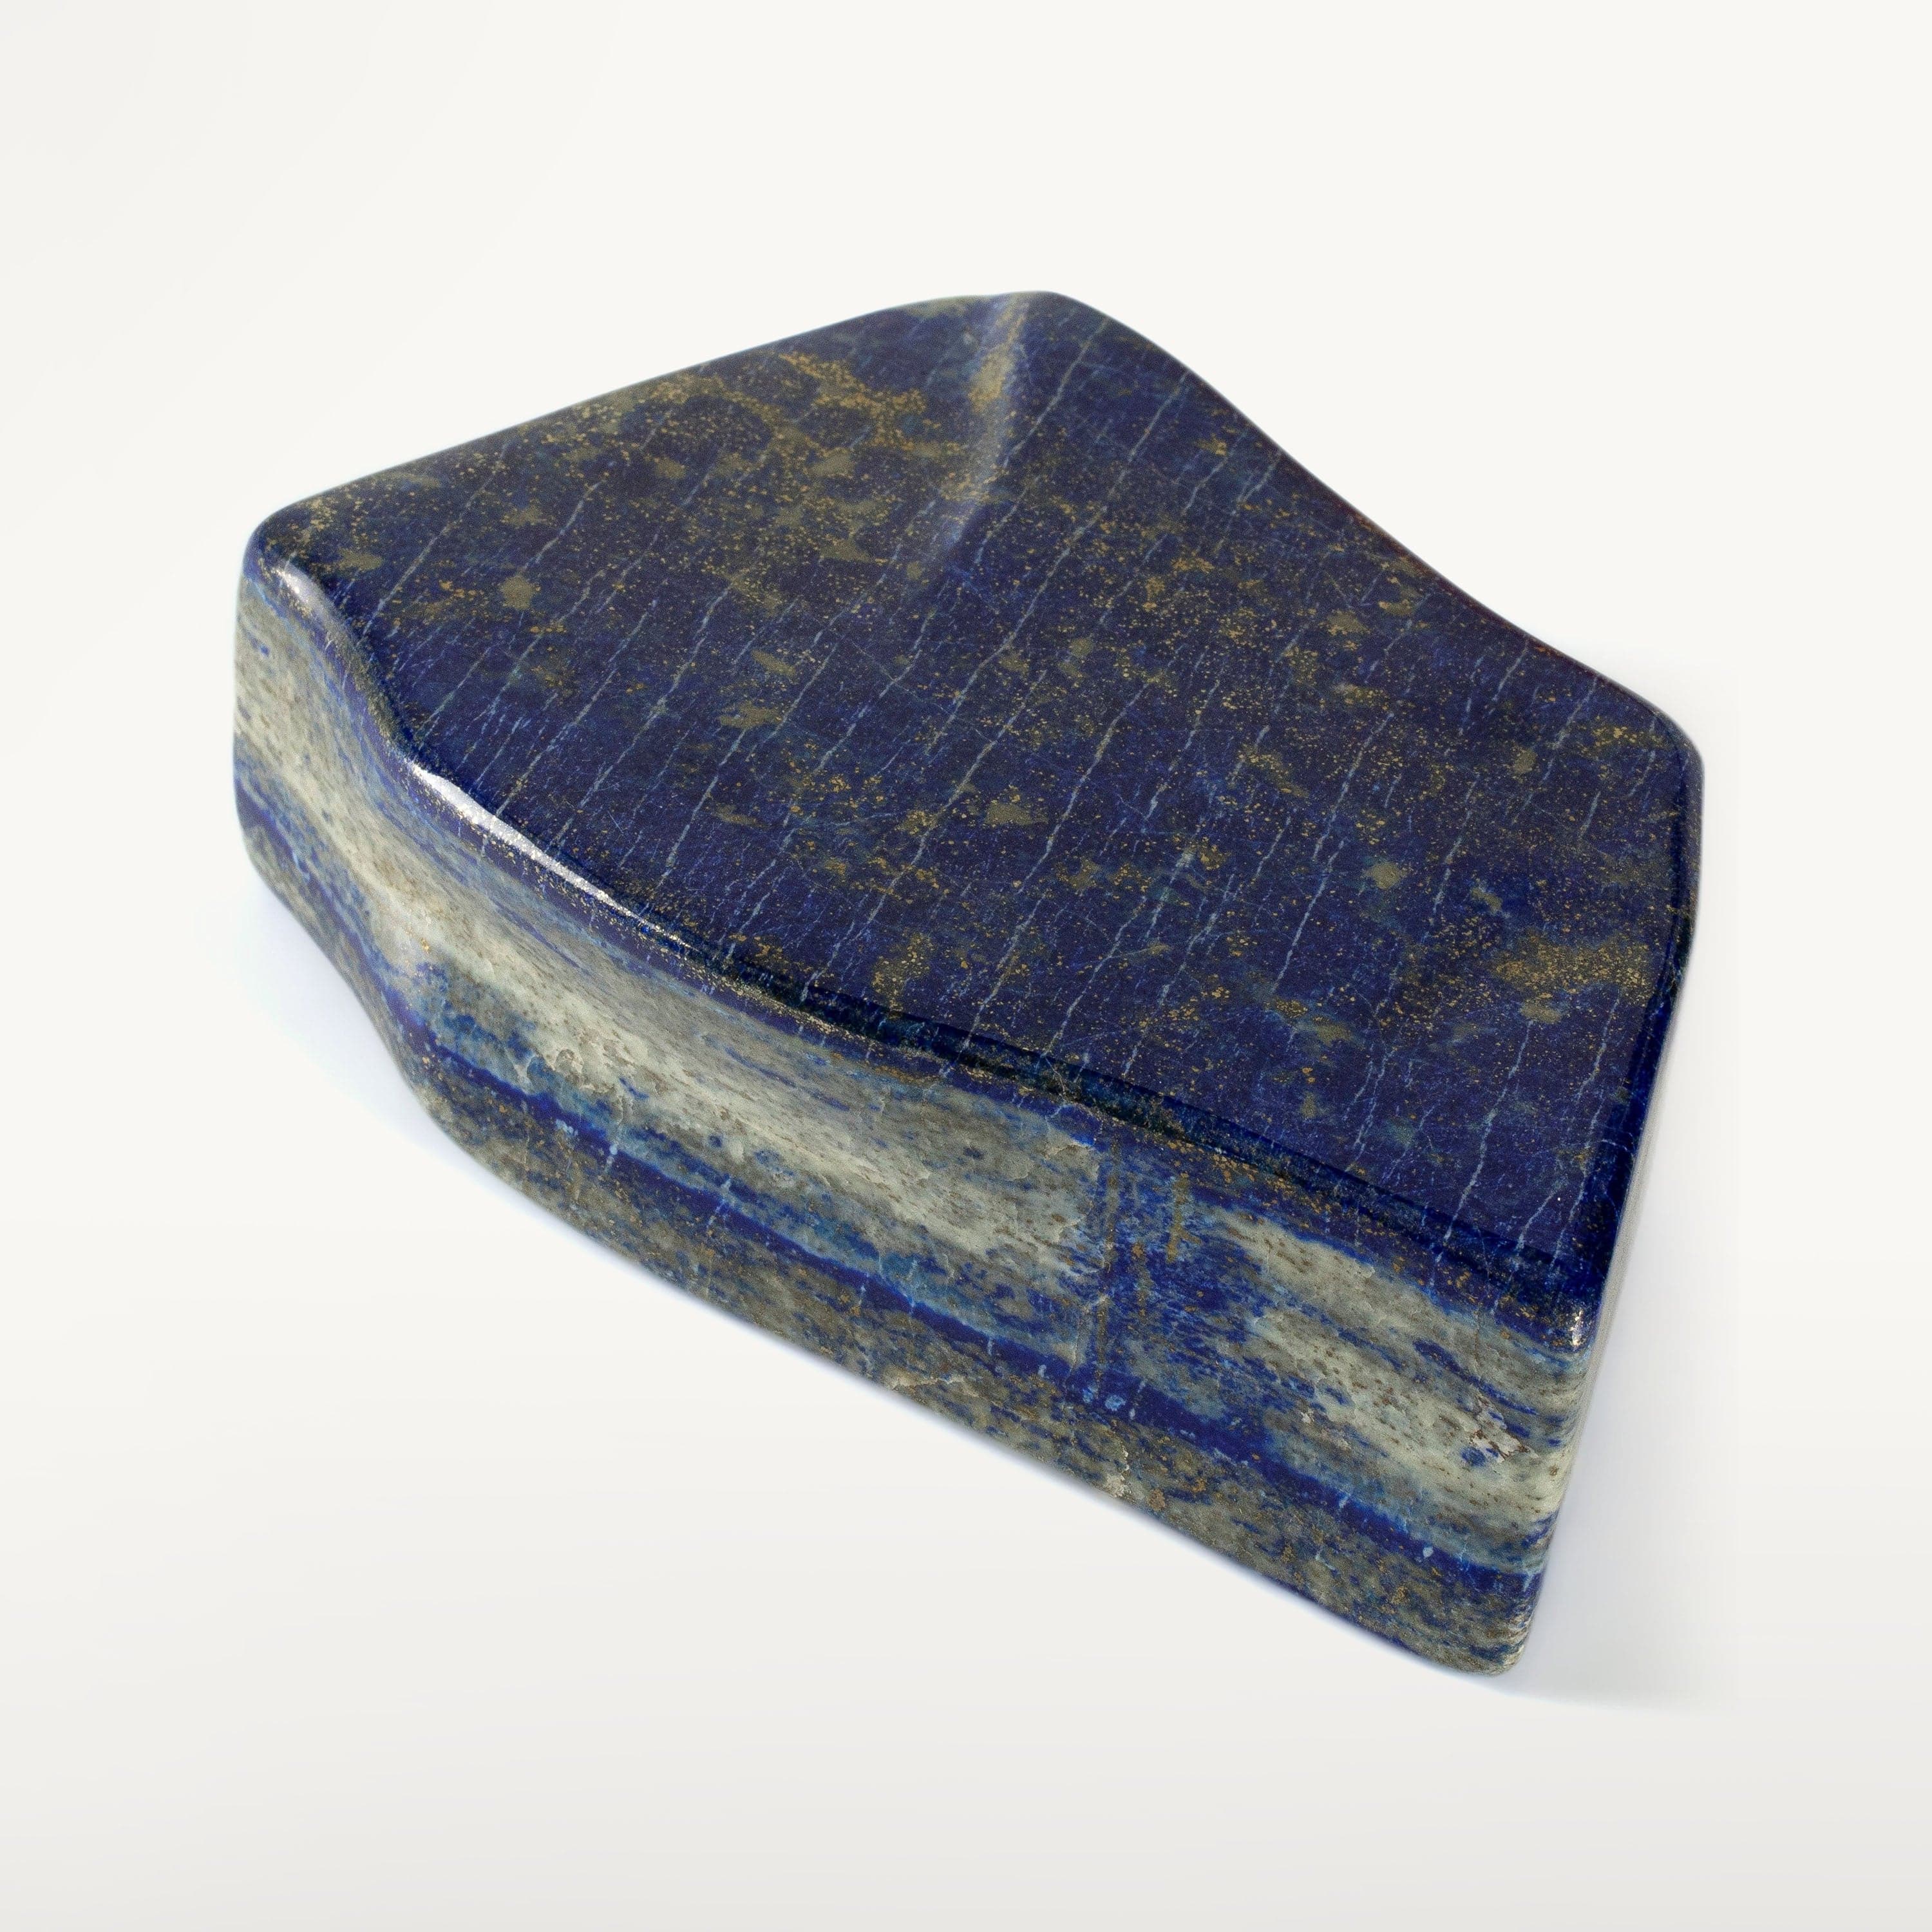 Kalifano Lapis Lapis Lazuli Freeform from Afghanistan - 6.5" / 1,710 grams LP1700.004